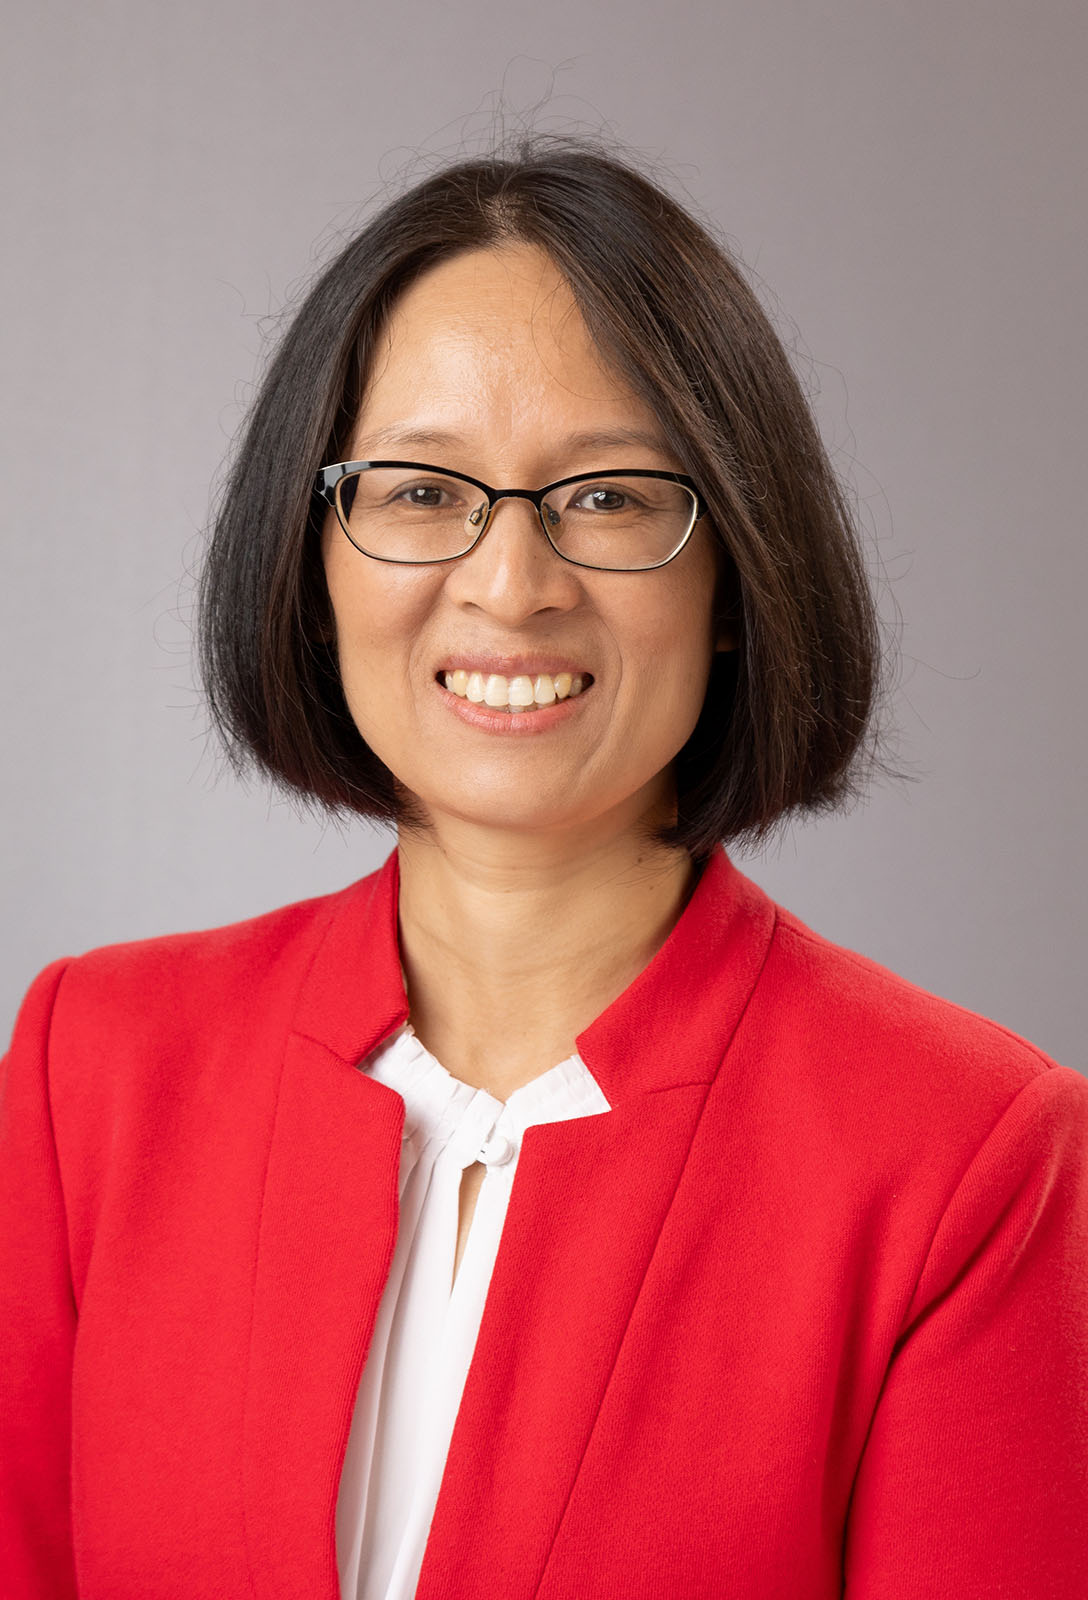 Yuane Jia from Department of Interdisciplinary Studies